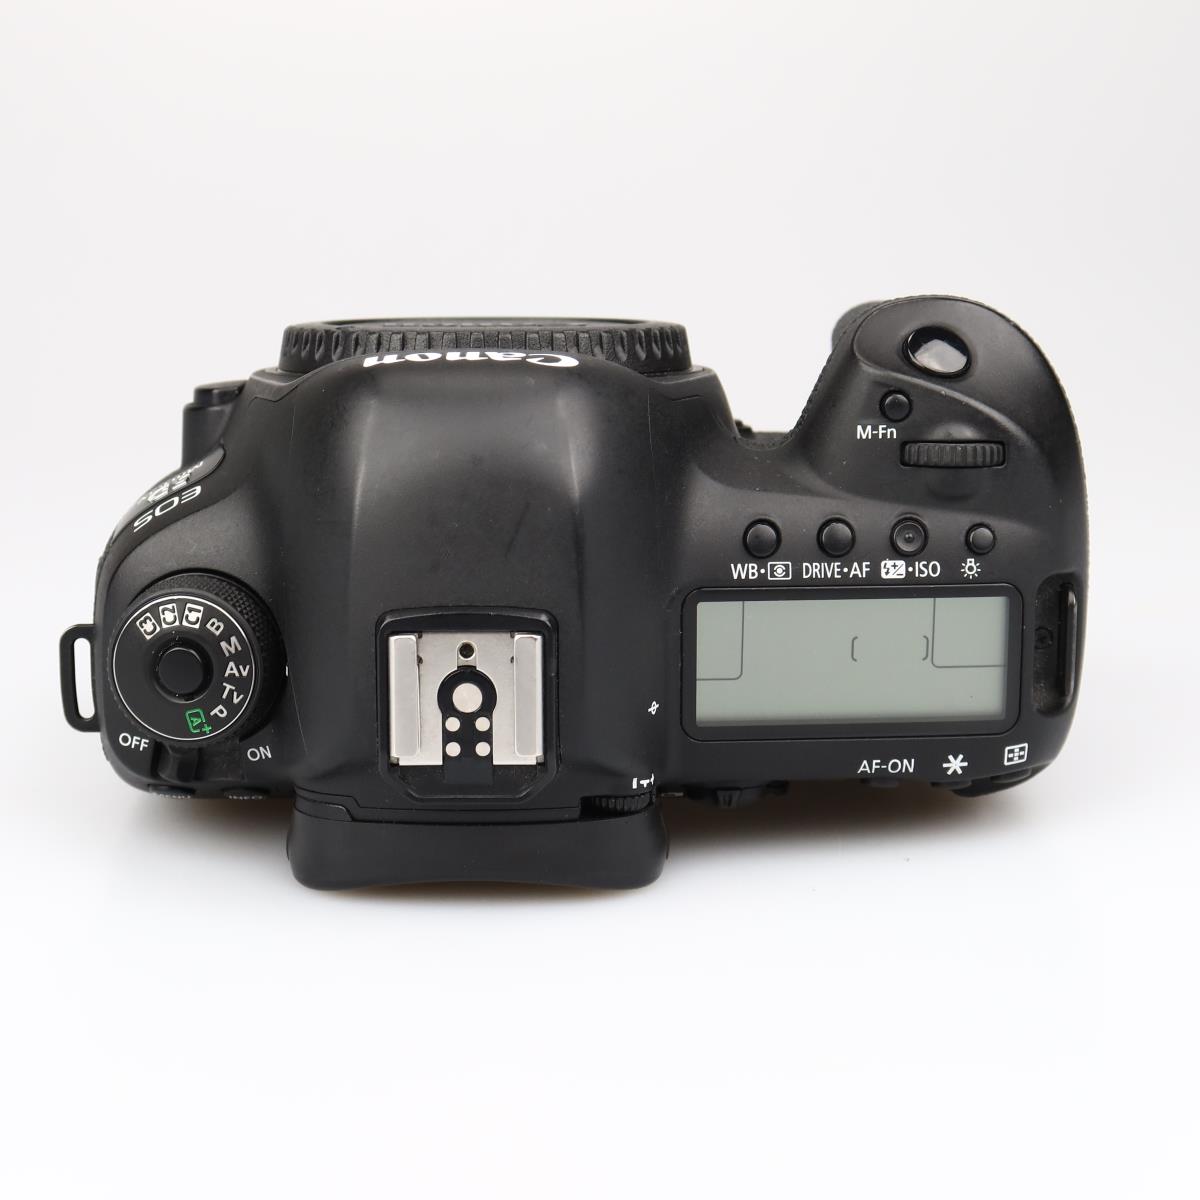 (Myyty) Canon EOS 5D Mark IV runko (SC: 46920) (käytetty)